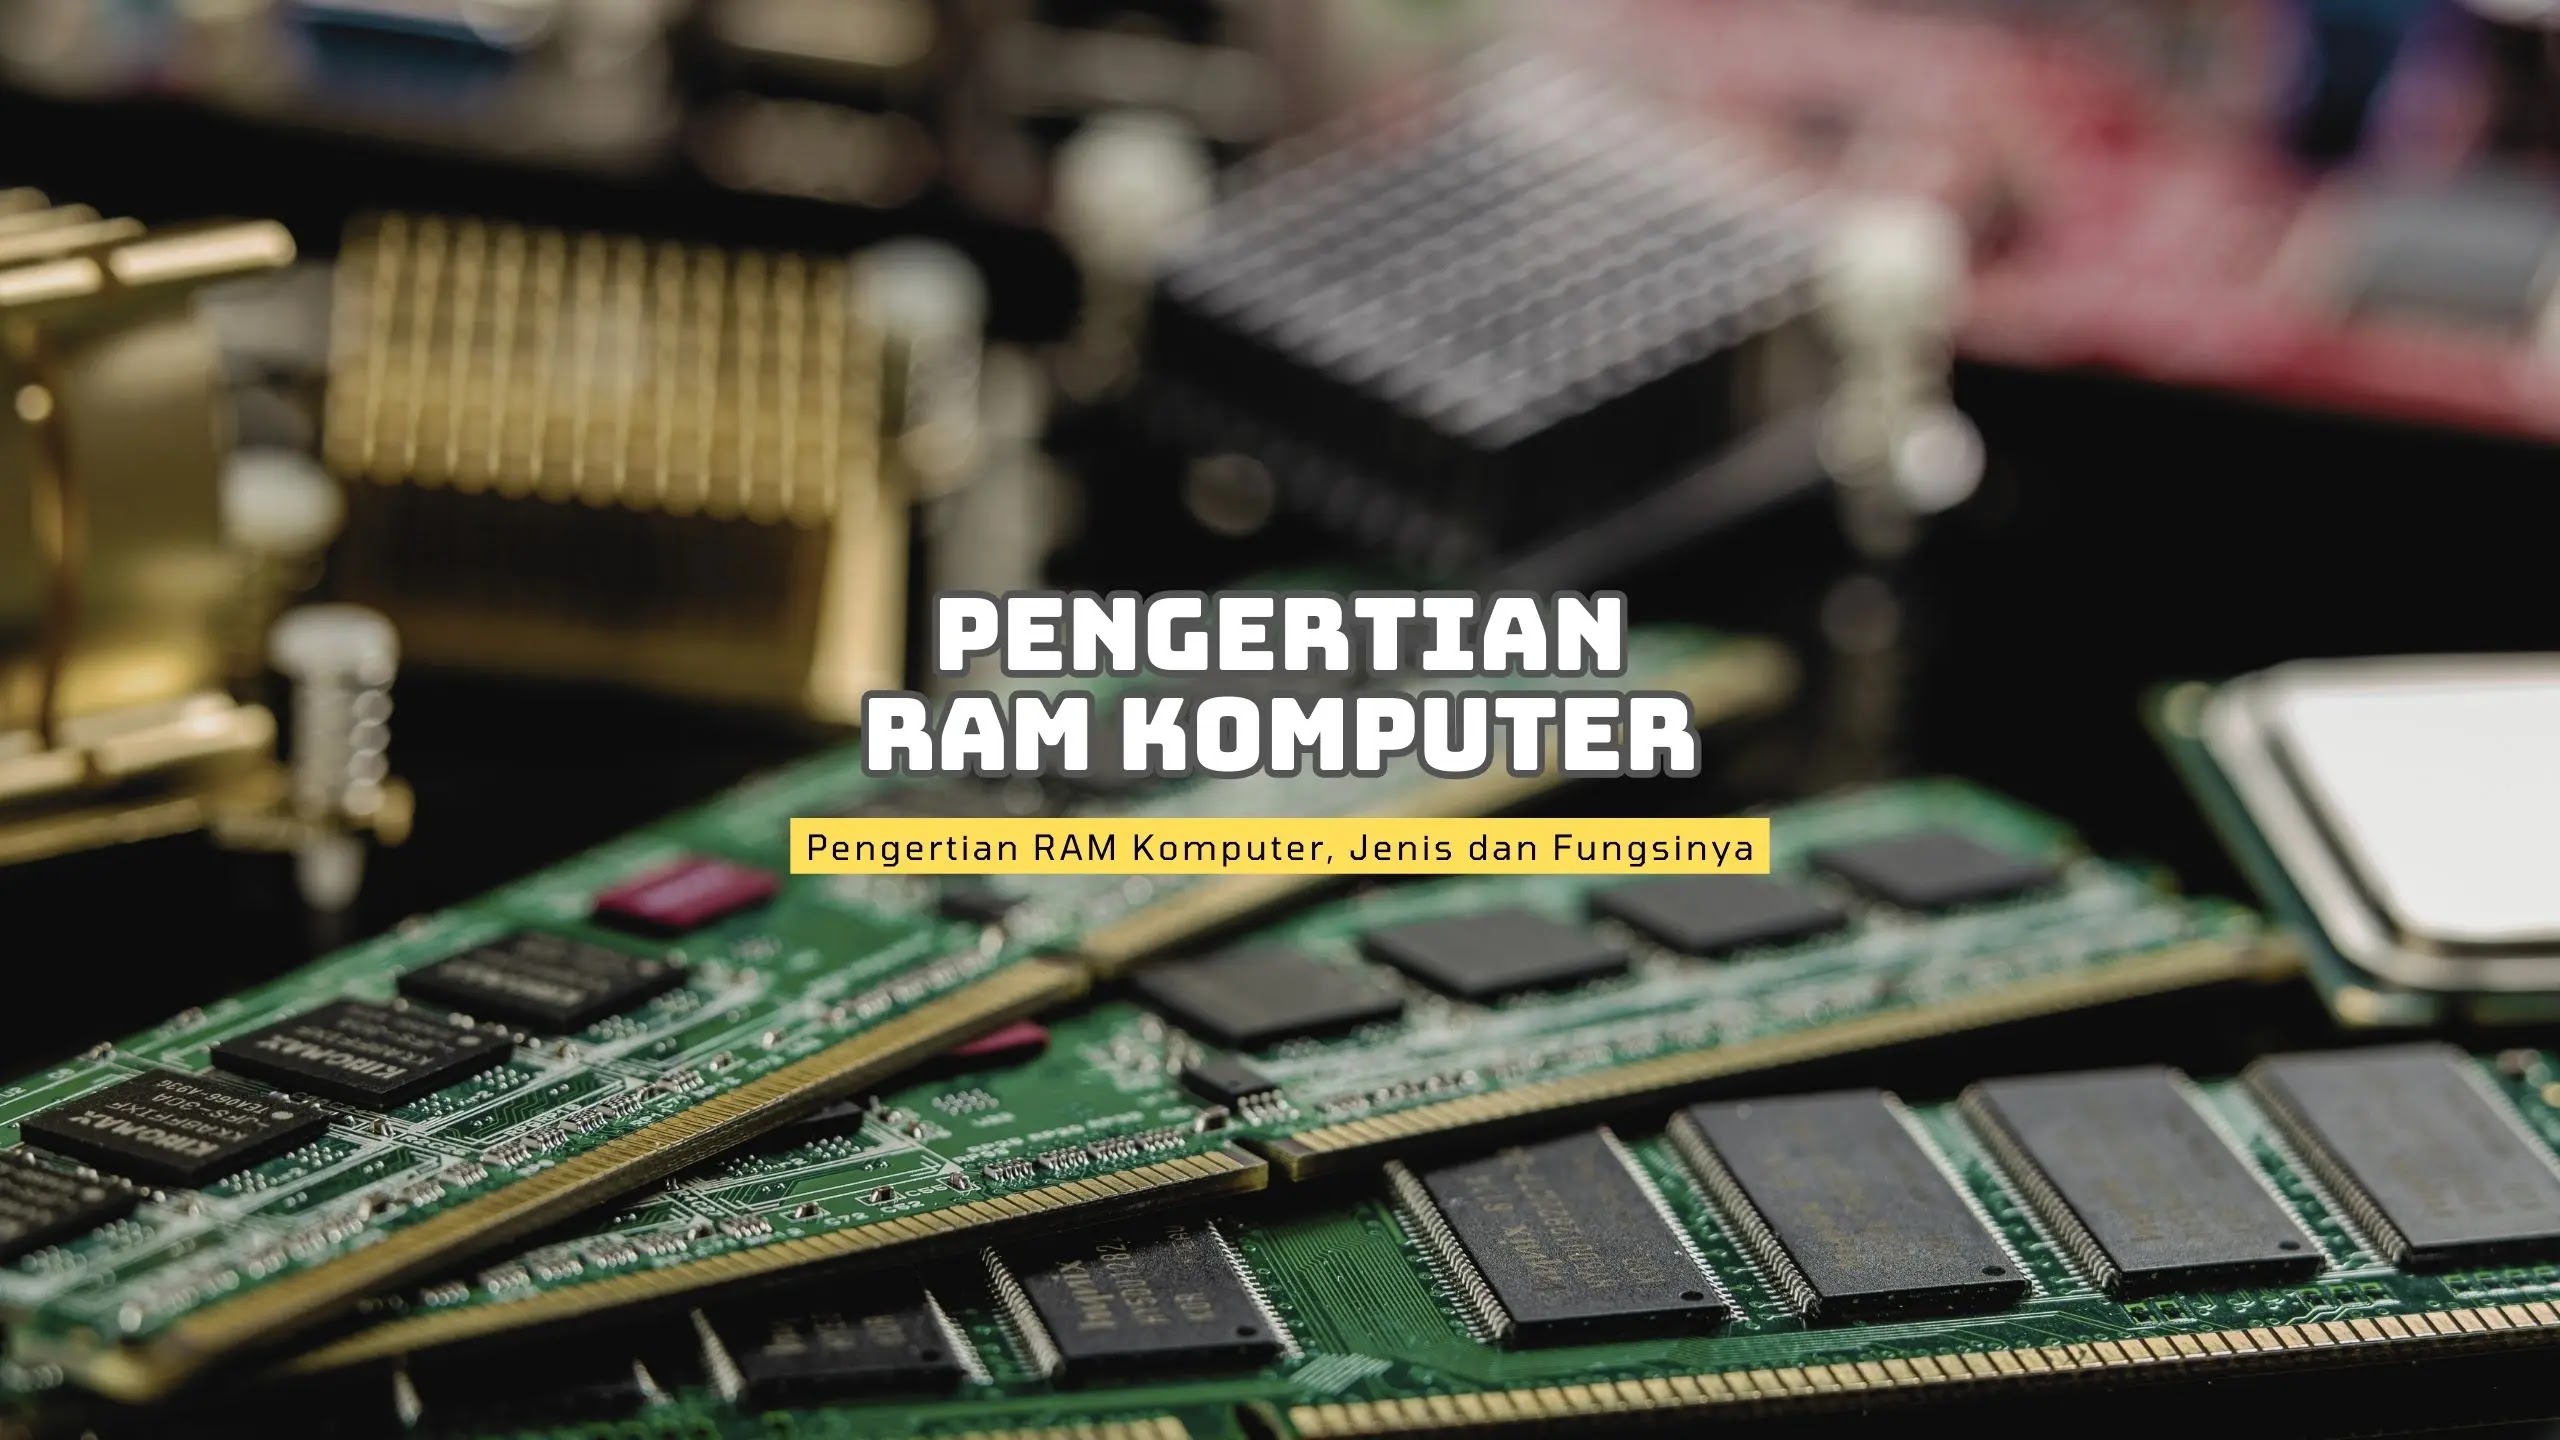 Pengertian RAM Komputer dan Fungsinya